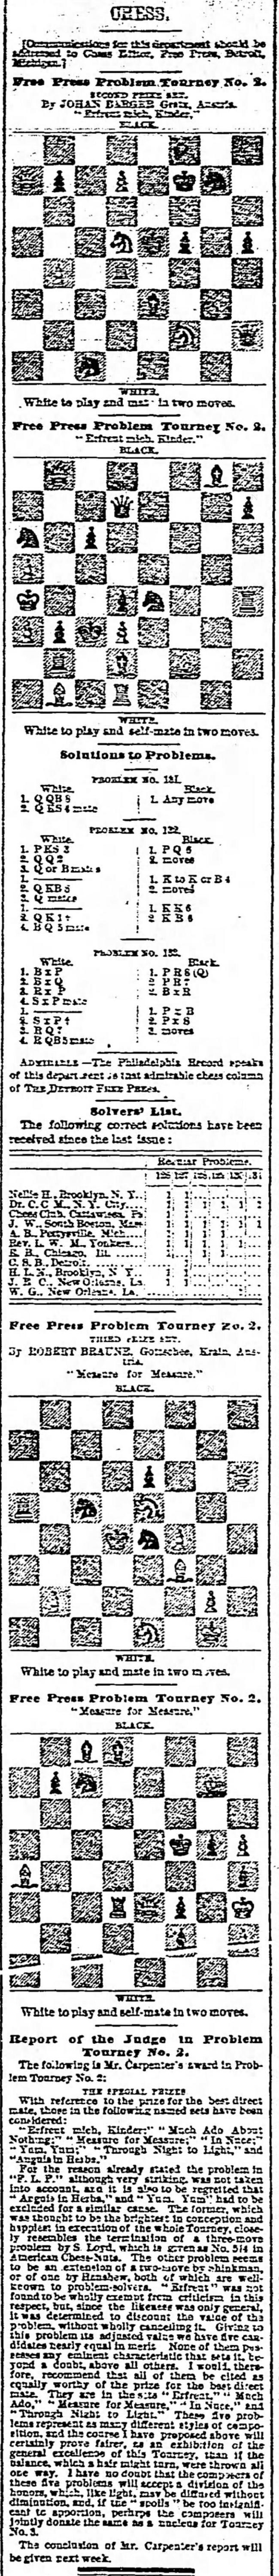 1877.01.14-01 Detroit Free Press.jpg